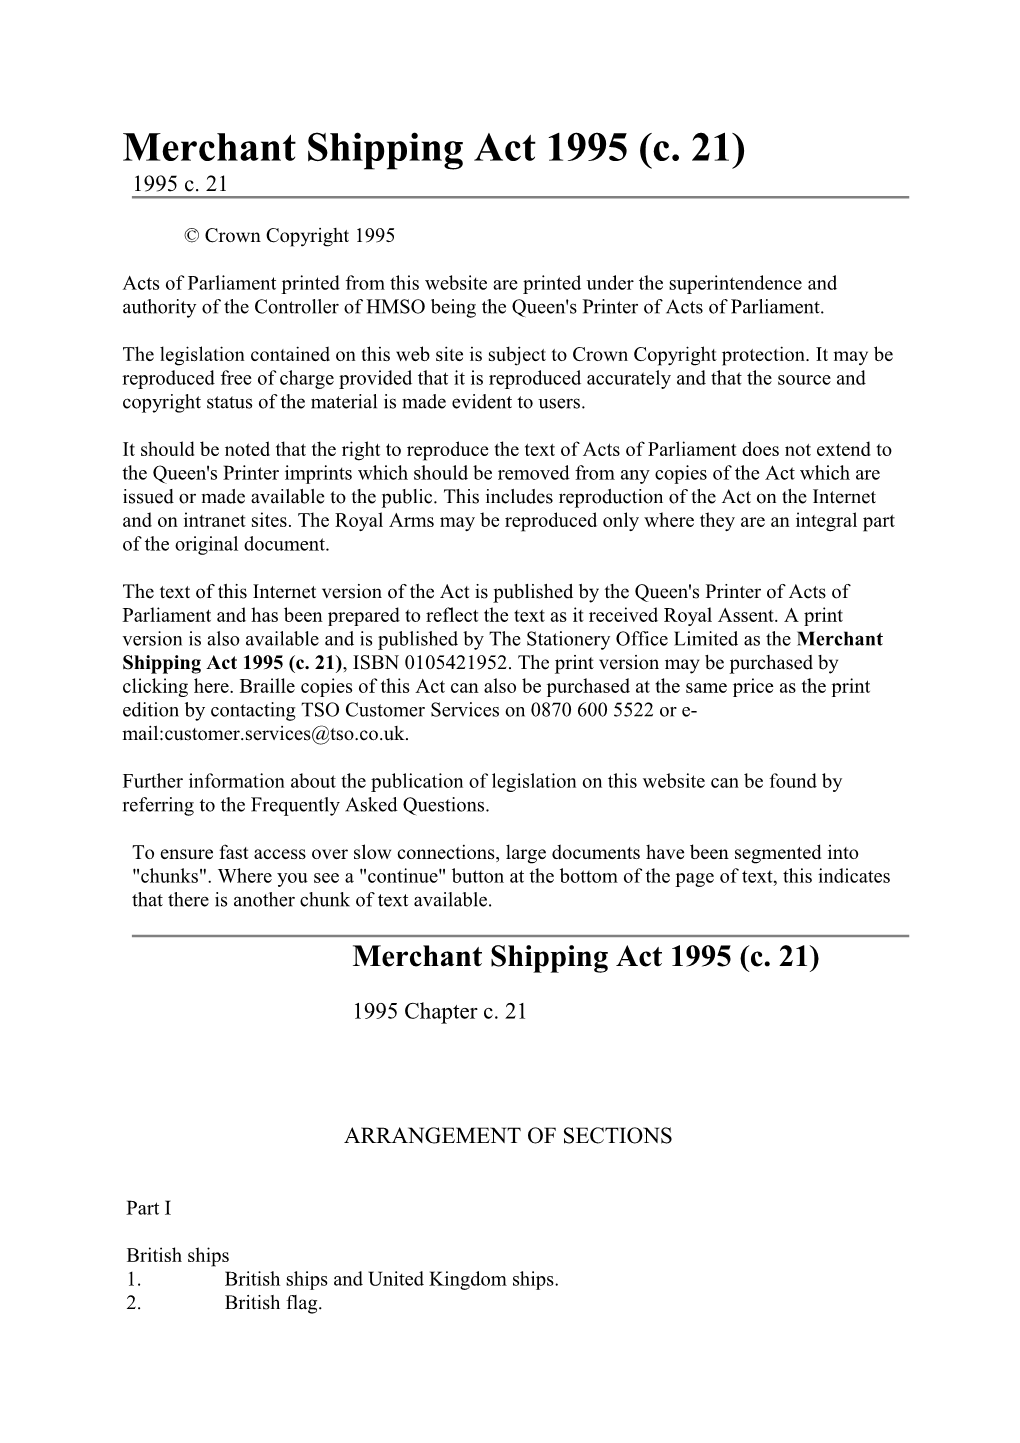 Merchant Shipping Act 1995 (C